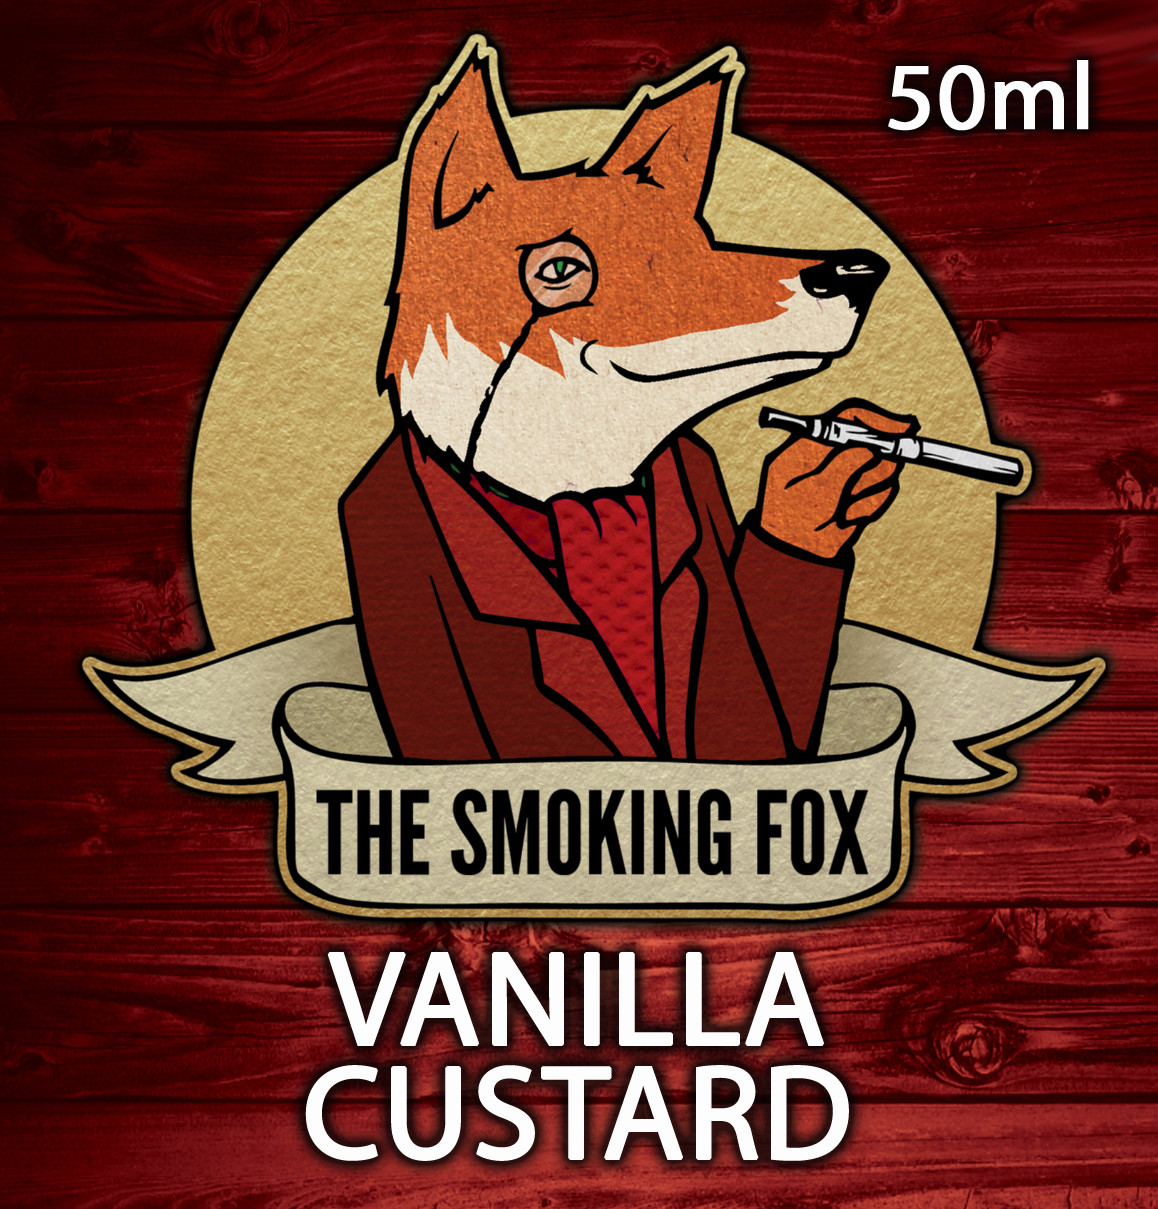 THE SMOKING FOX 50ml - VANILLA